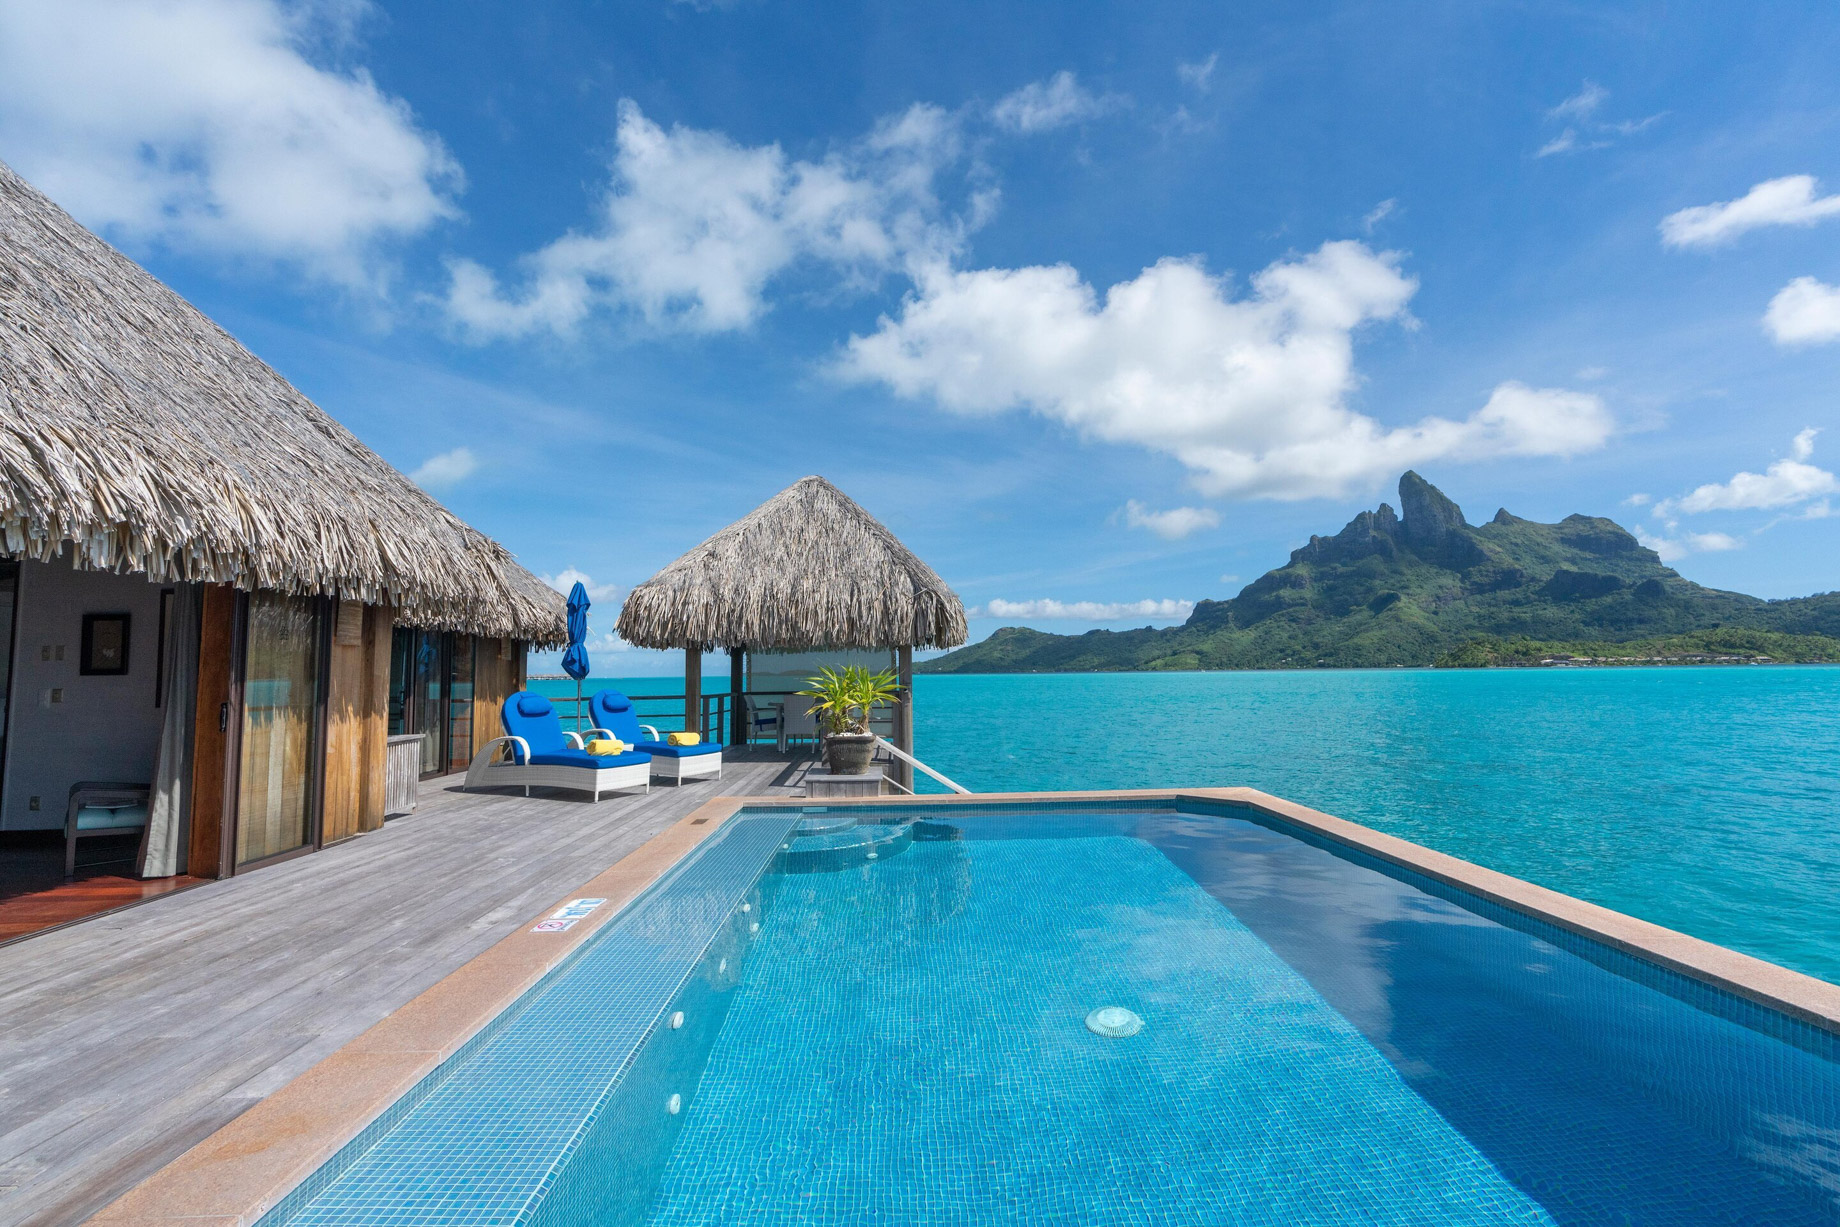 The St. Regis Bora Bora Resort - Bora Bora, French Polynesia - Two Bedrooms Overwater Royal Suite Villa View Swimming Pool